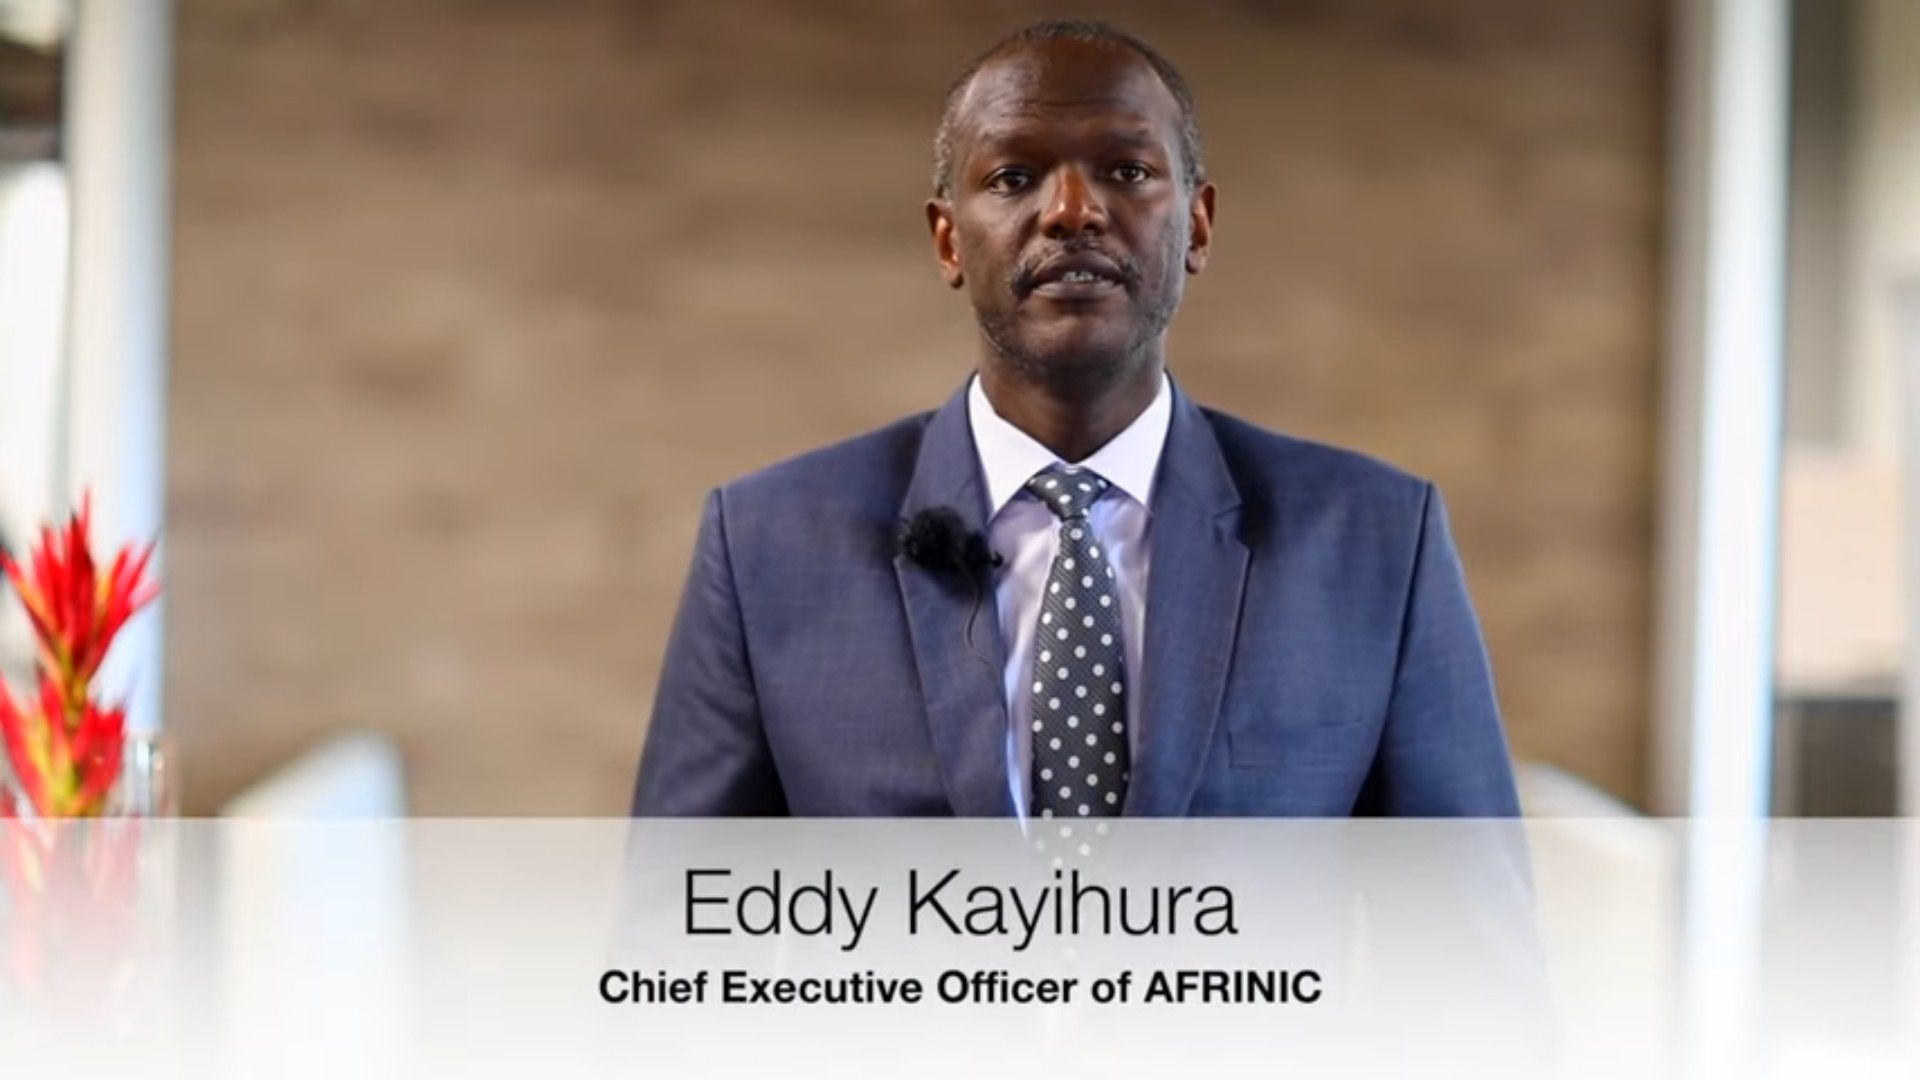 Eddy Kayihura, Chief Executive Officer of AFRINIC